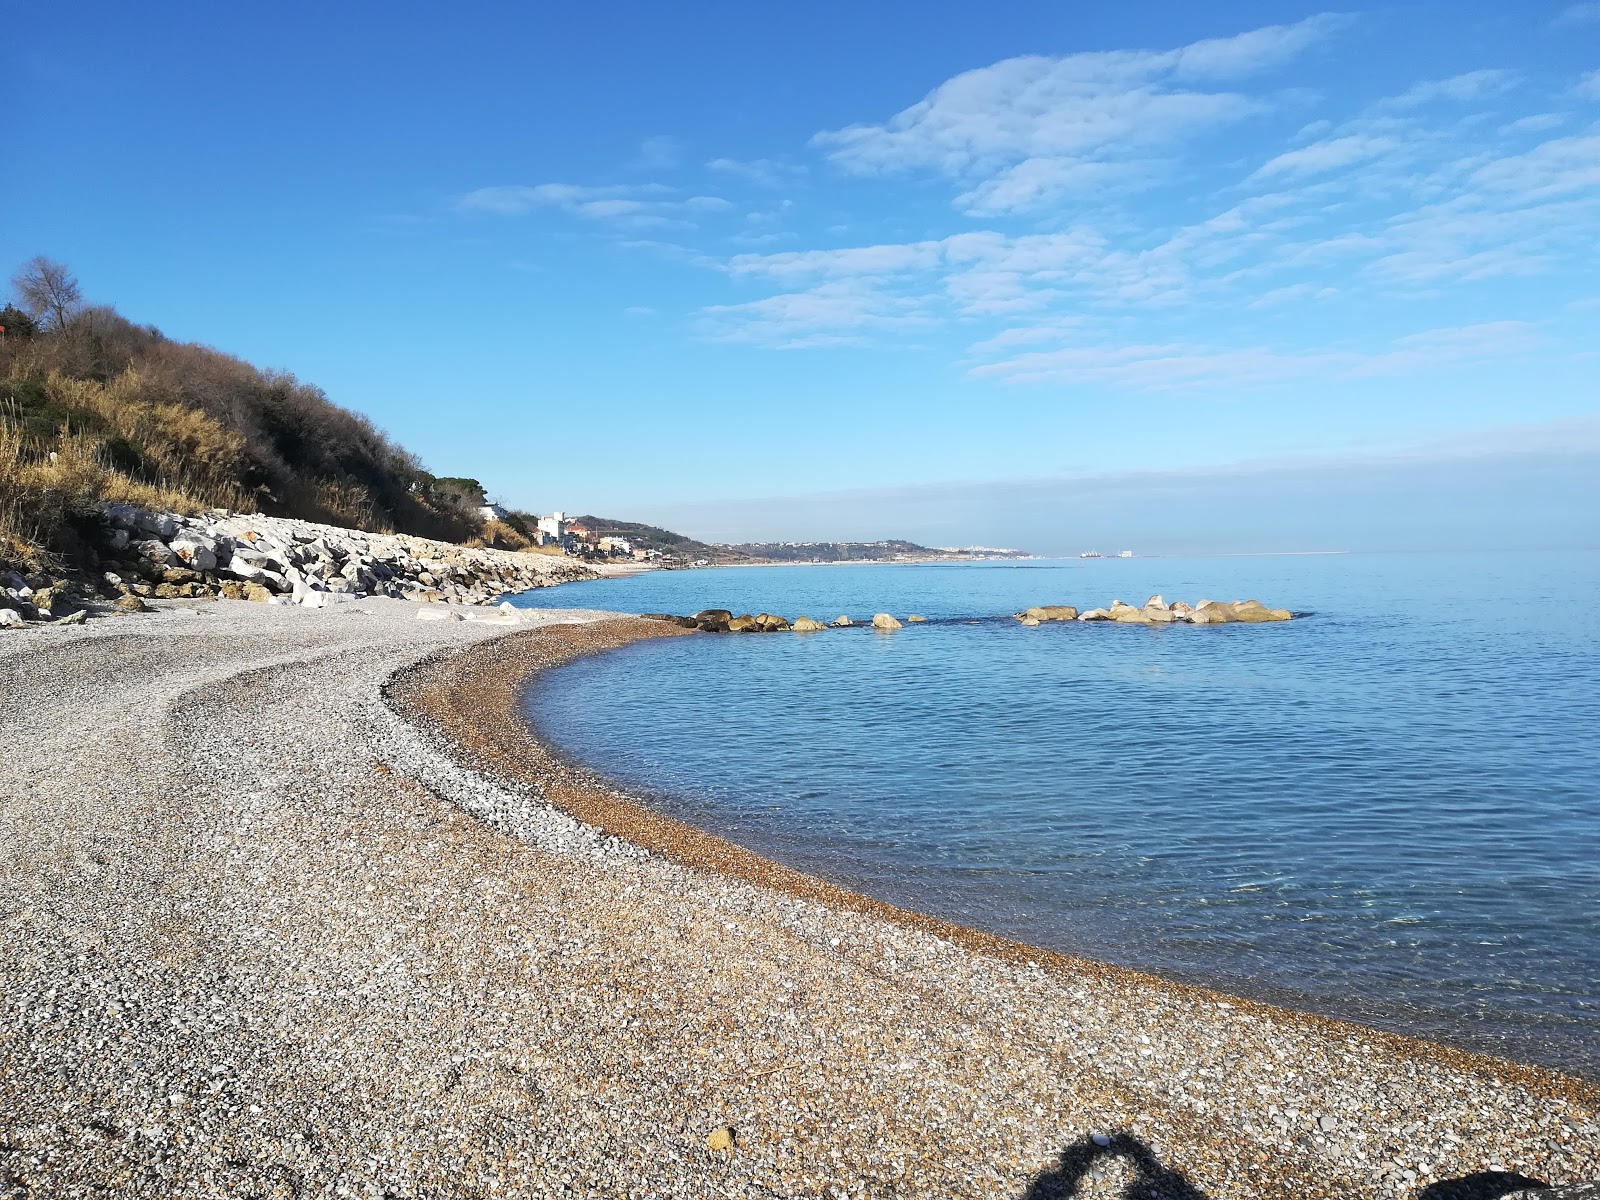 Foto de Spiaggia di Calata Turchino con pequeñas calas